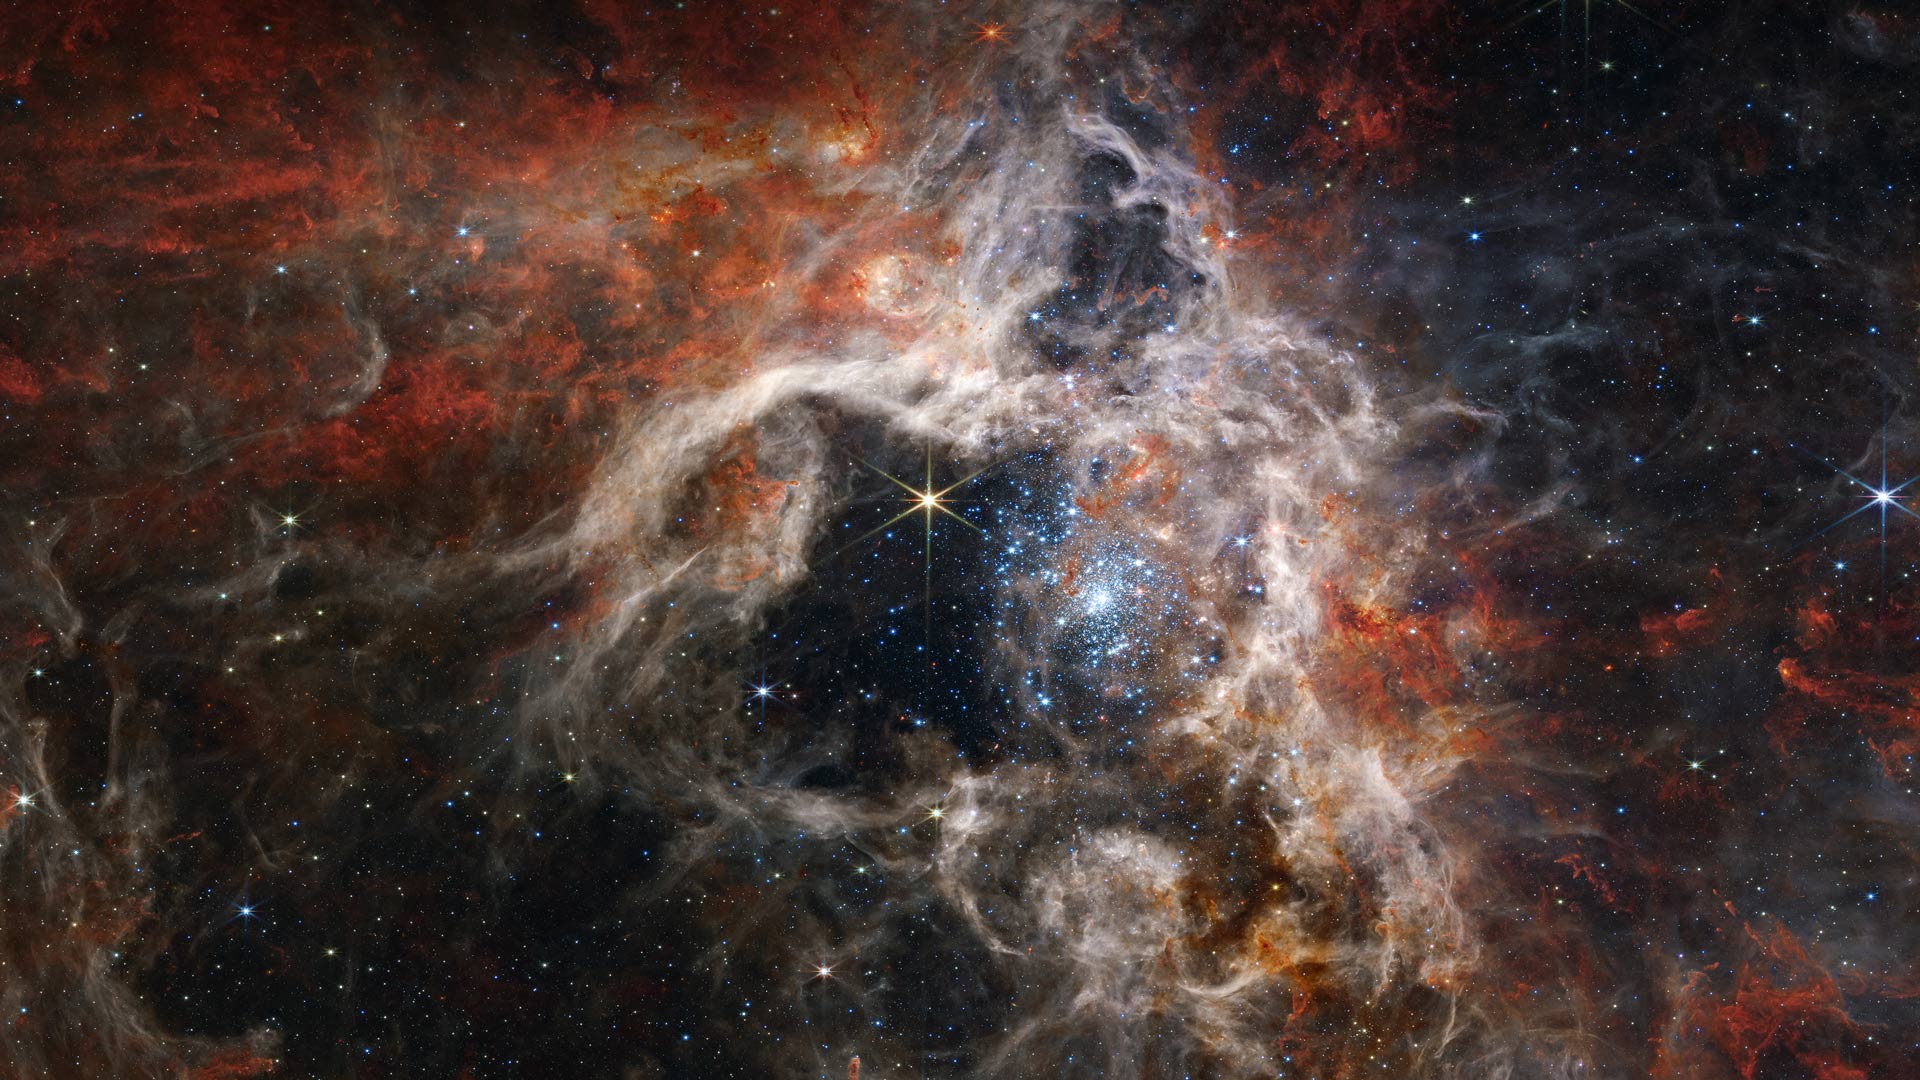 Young stars forming in the Tarantula Nebula